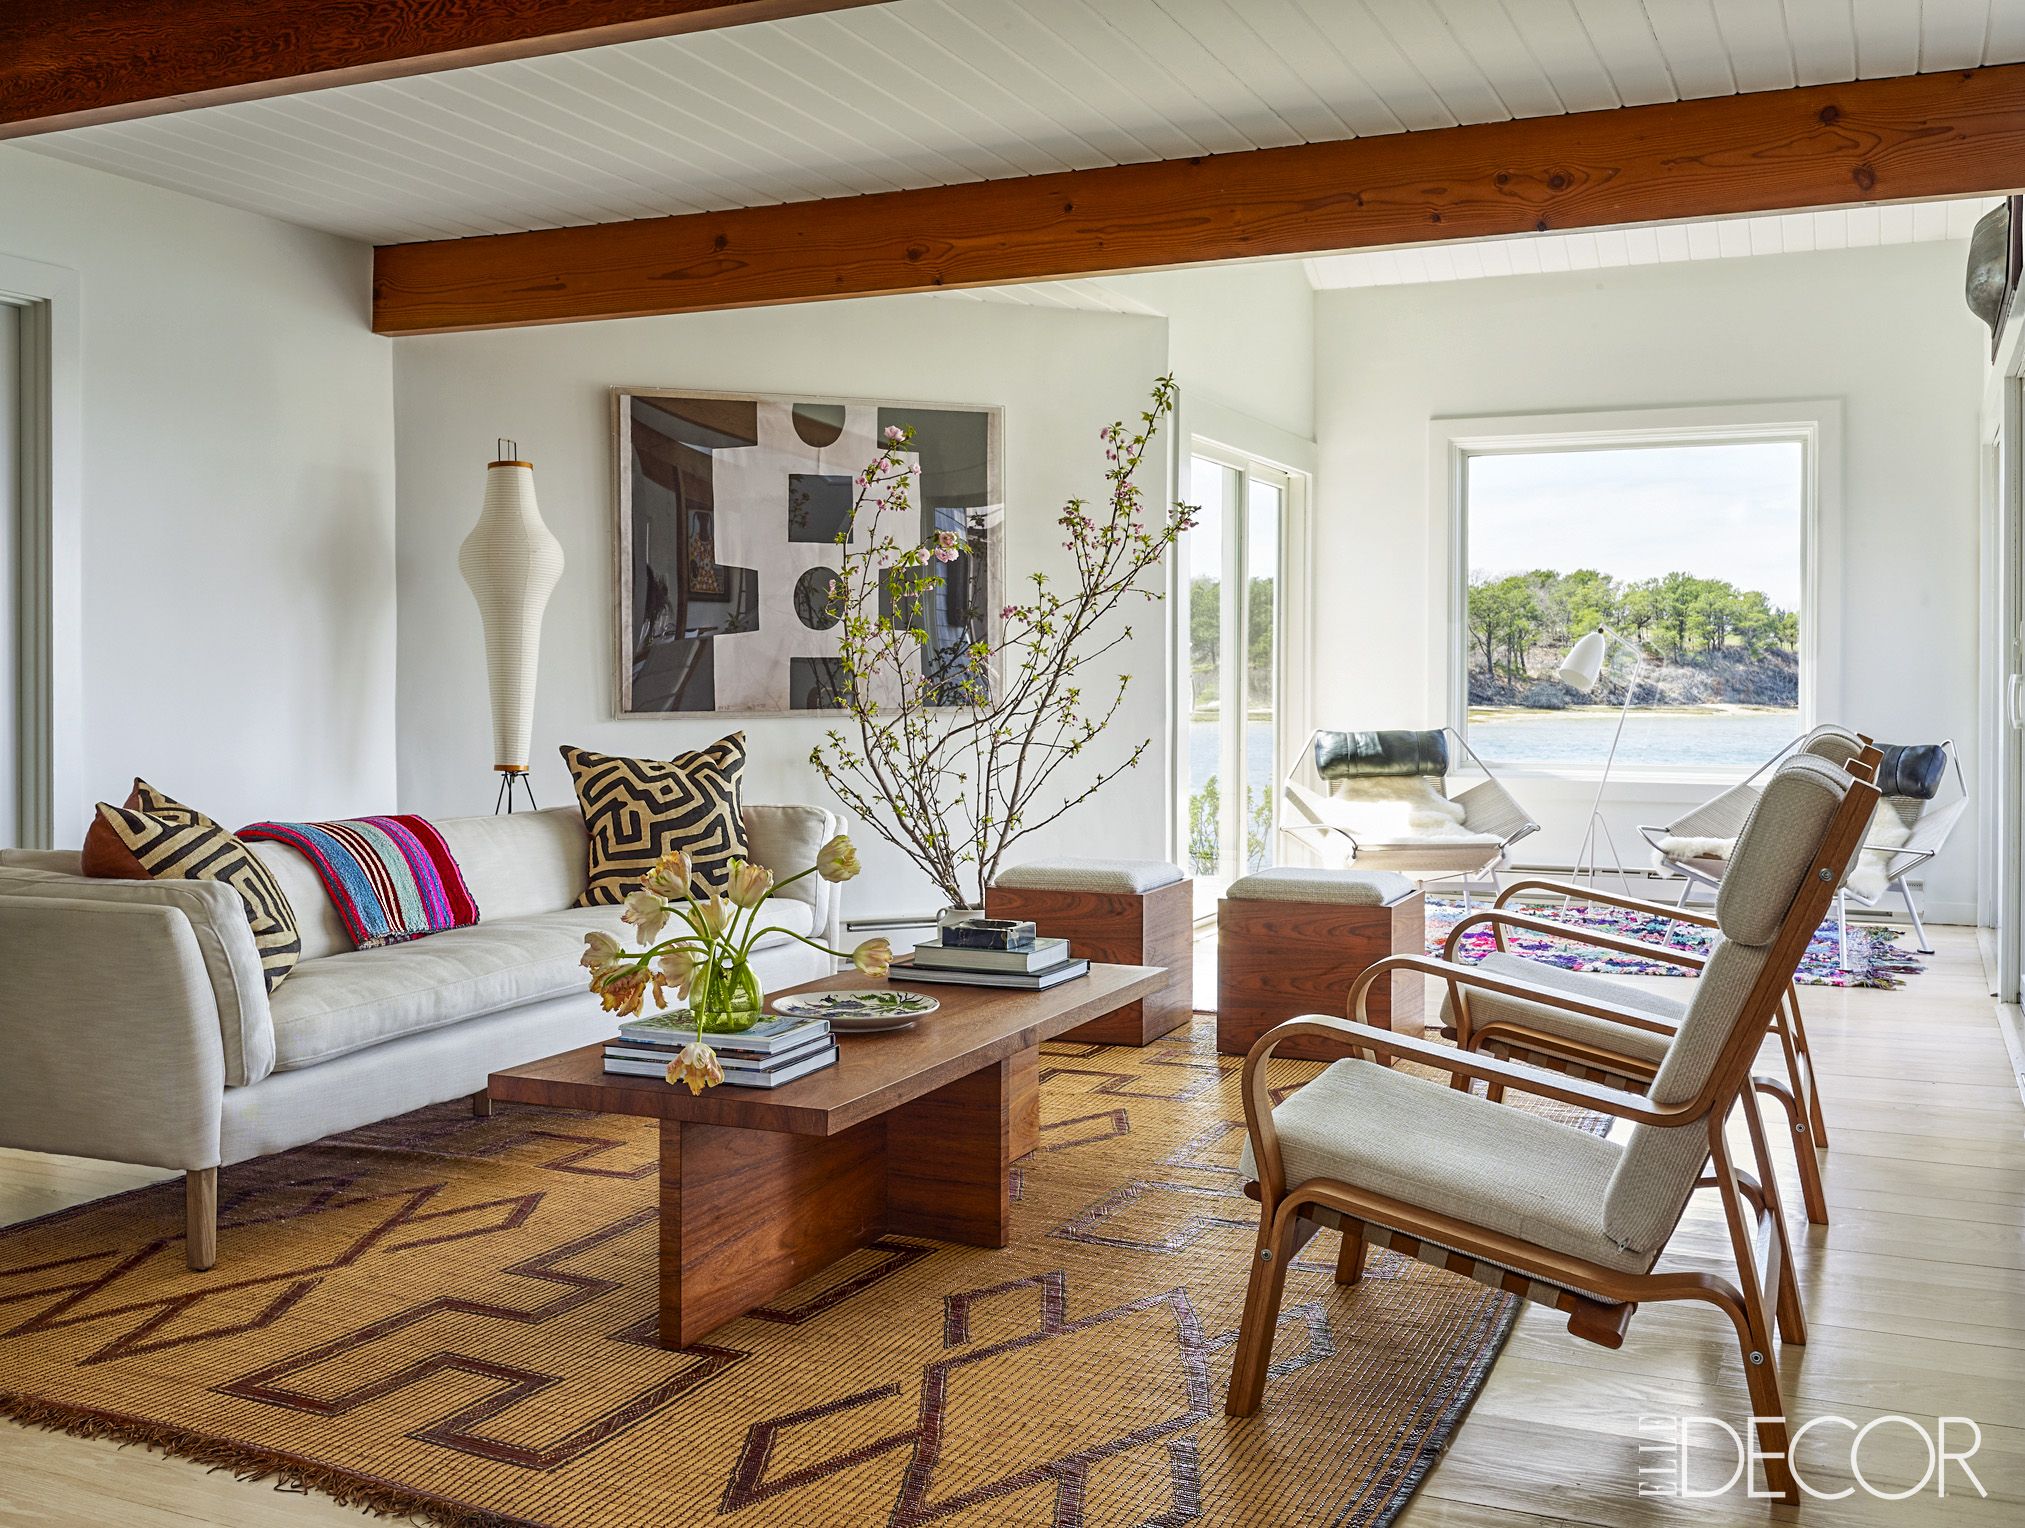 21 Coastal Themed Living Room Designs (Decorating Ideas) - Designing Idea